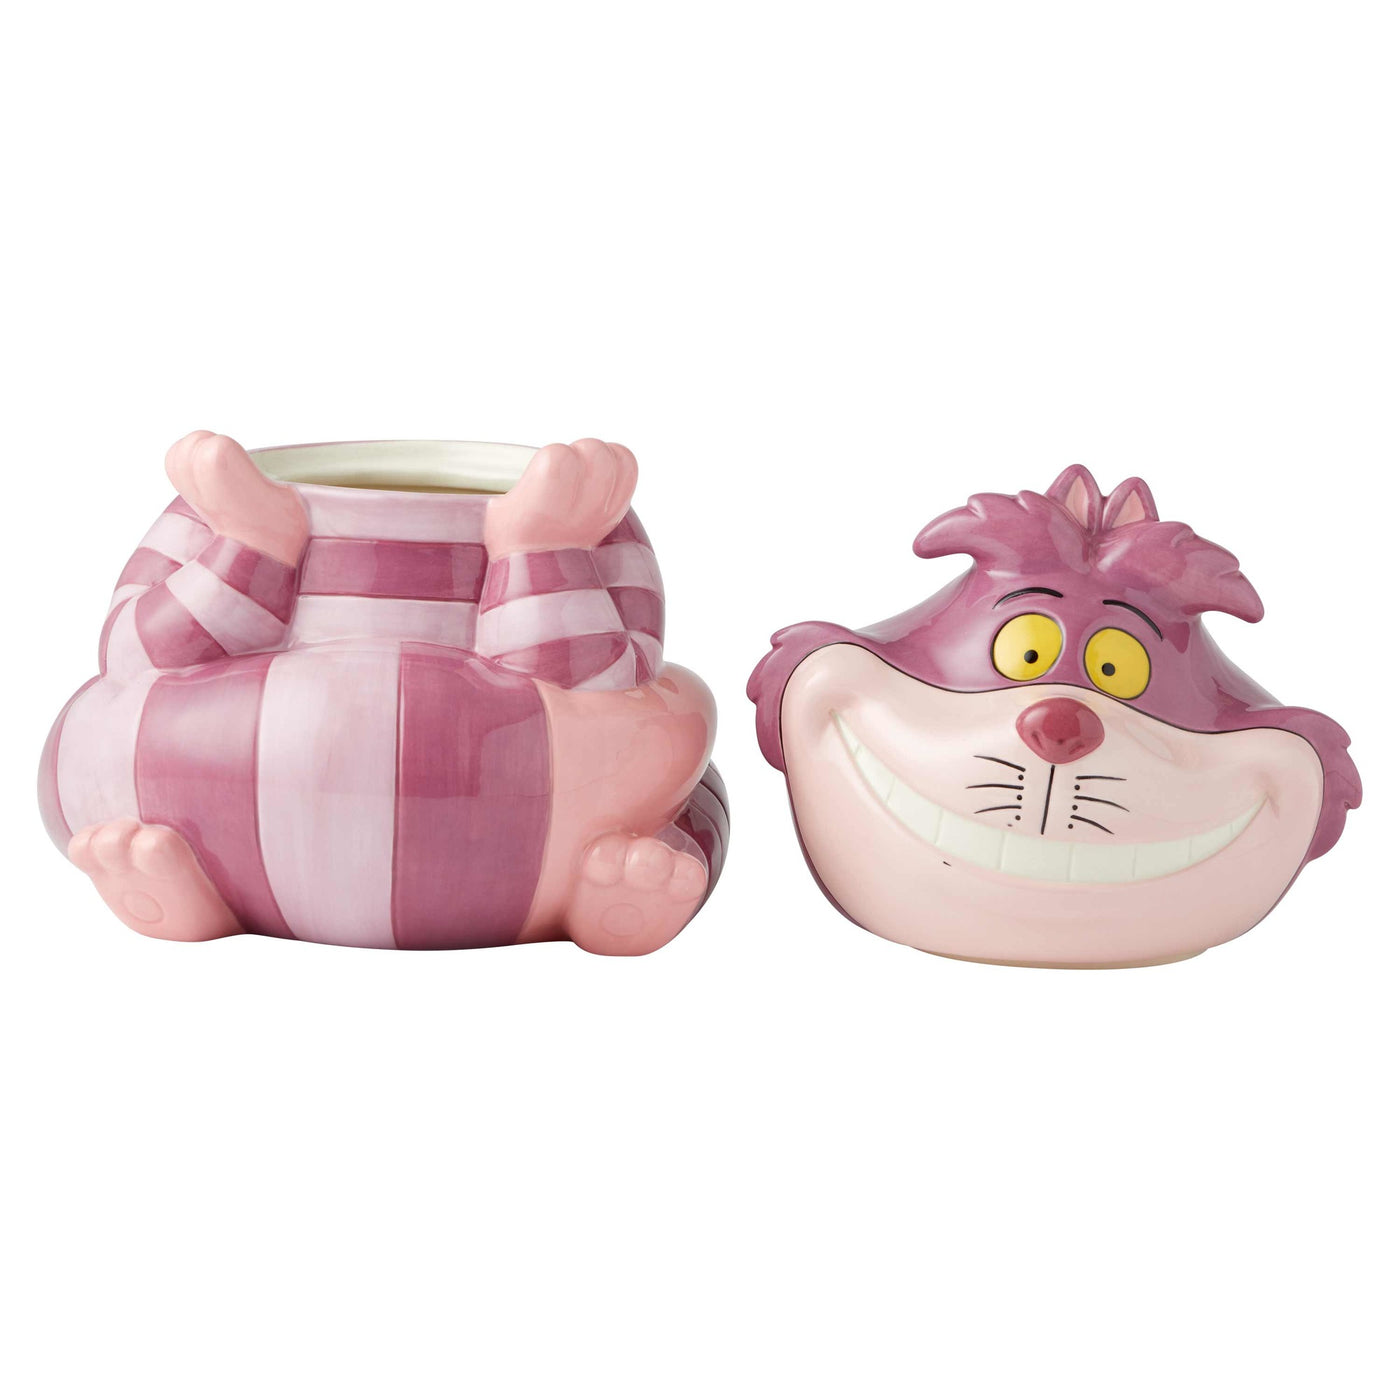 Enesco Disney Ceramics Cheshire Cat Cookie Jar New with Box